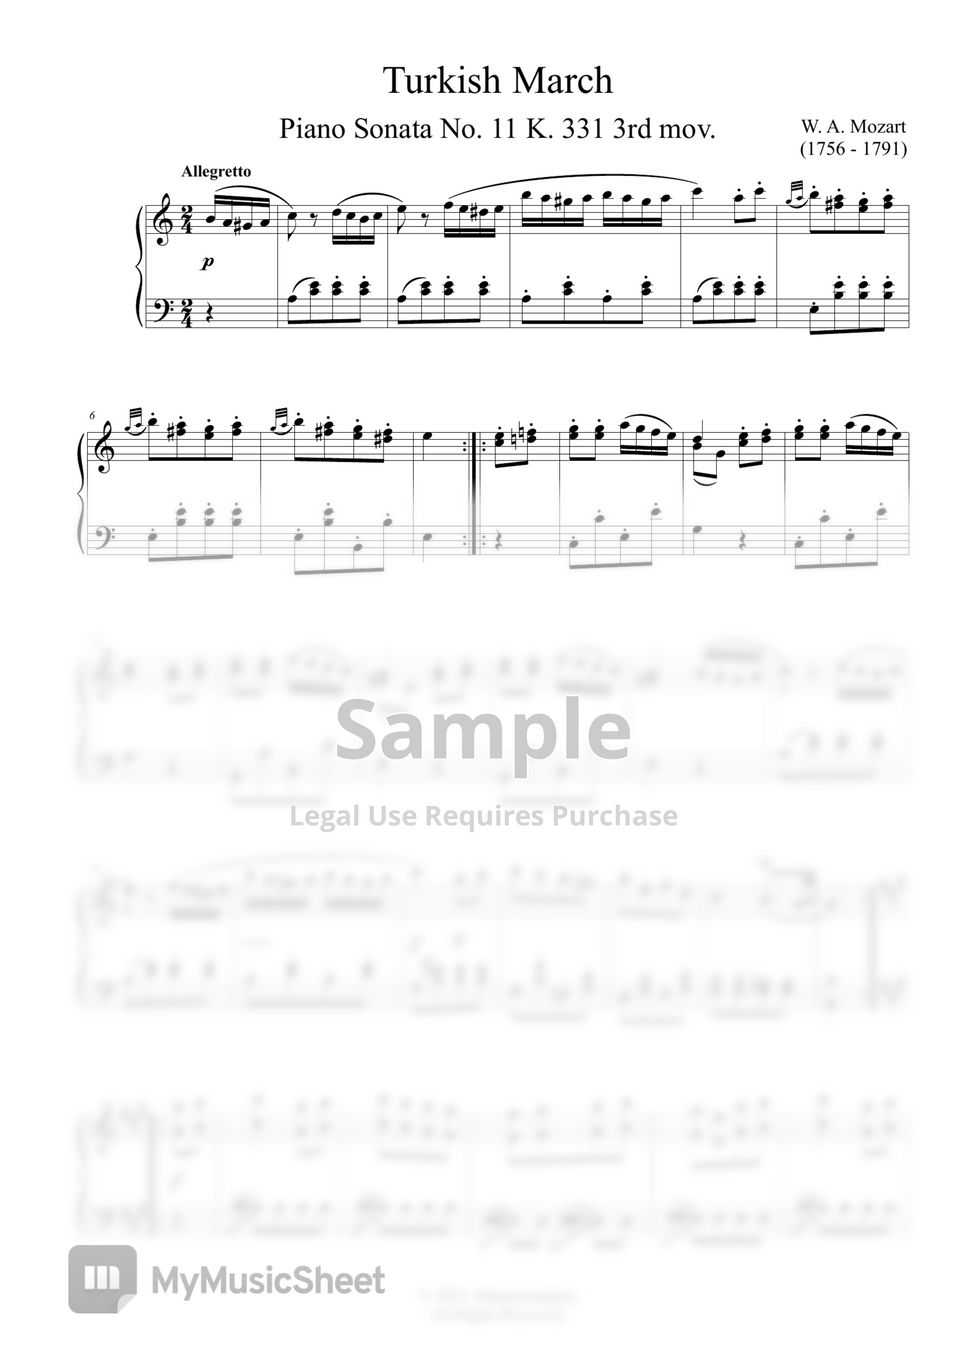 W. A. Mozart - Turkish March (Piano Sonata No. 11)